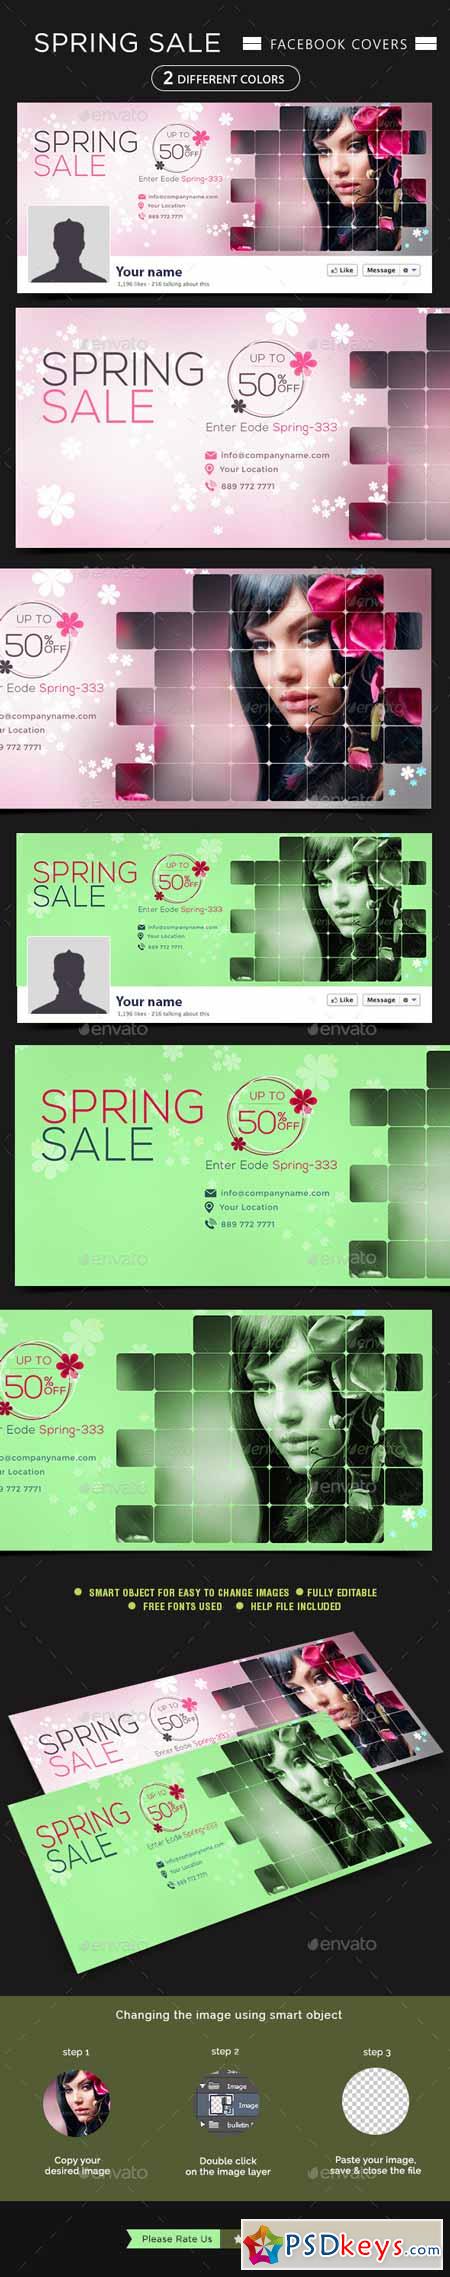 Spring Sale Facebook Cover 10706283